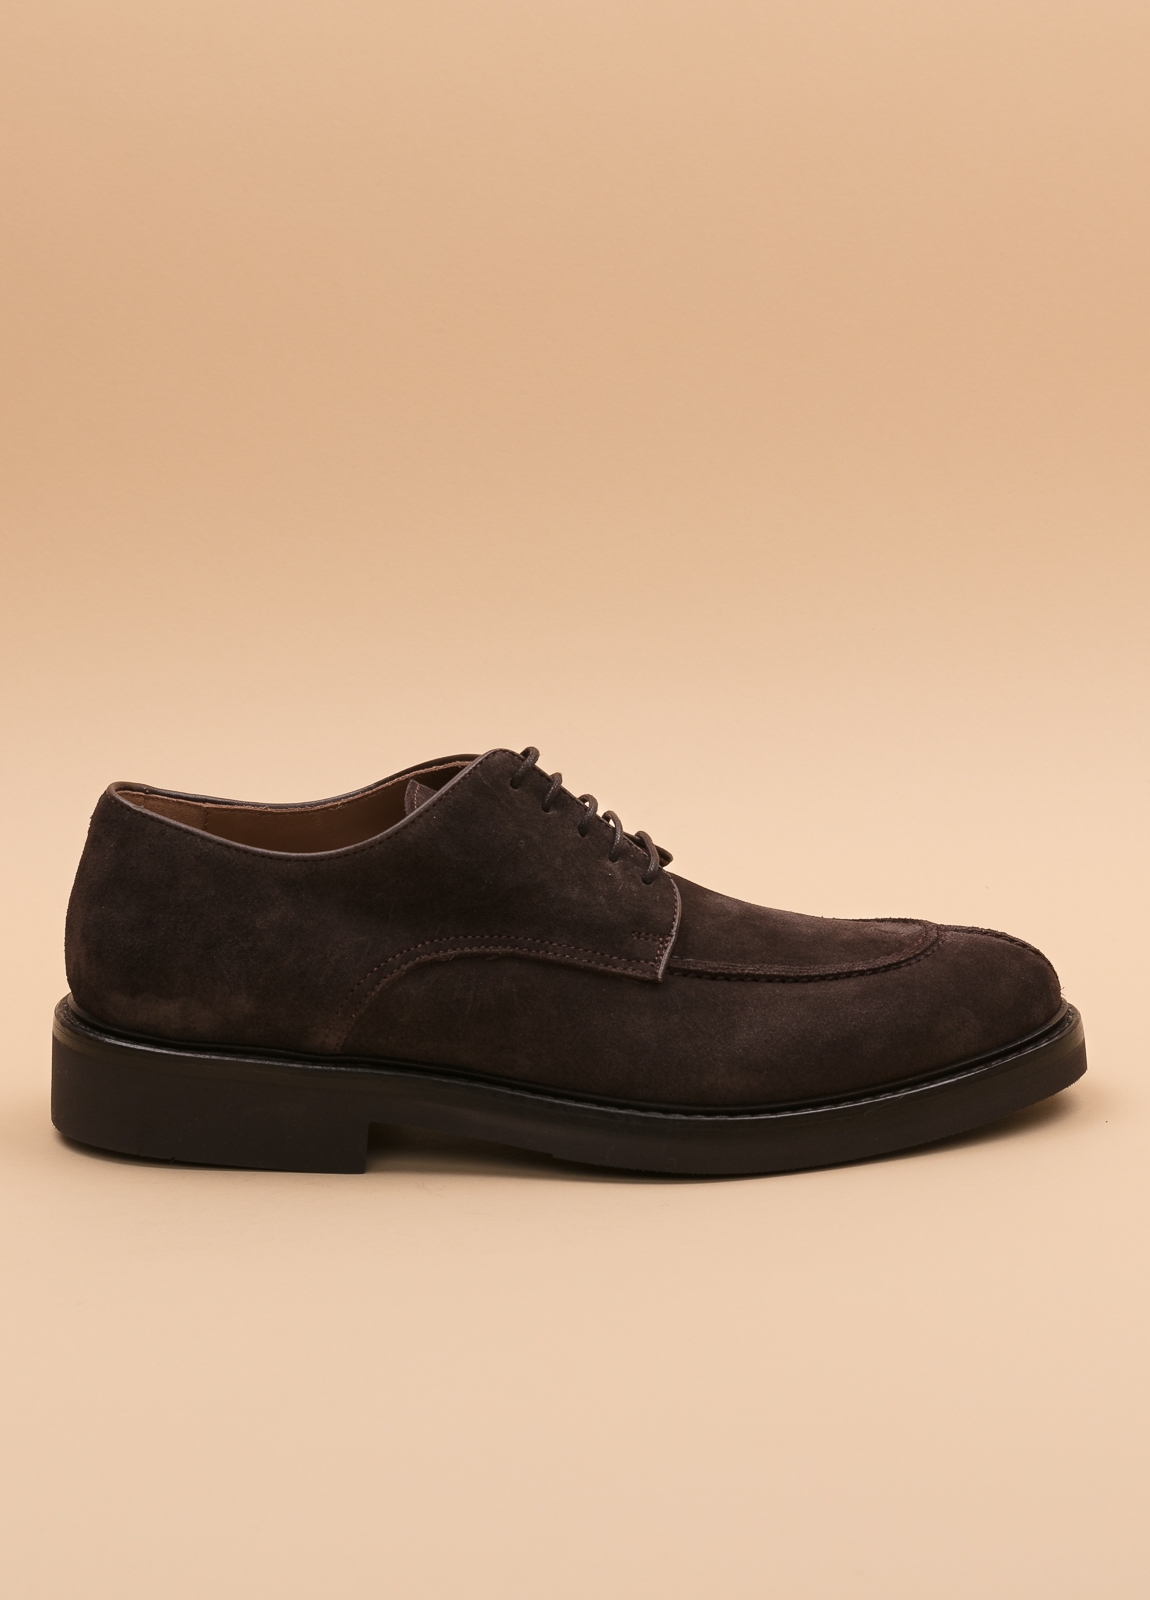 Zapato sport wear furest colección marrón oscuro